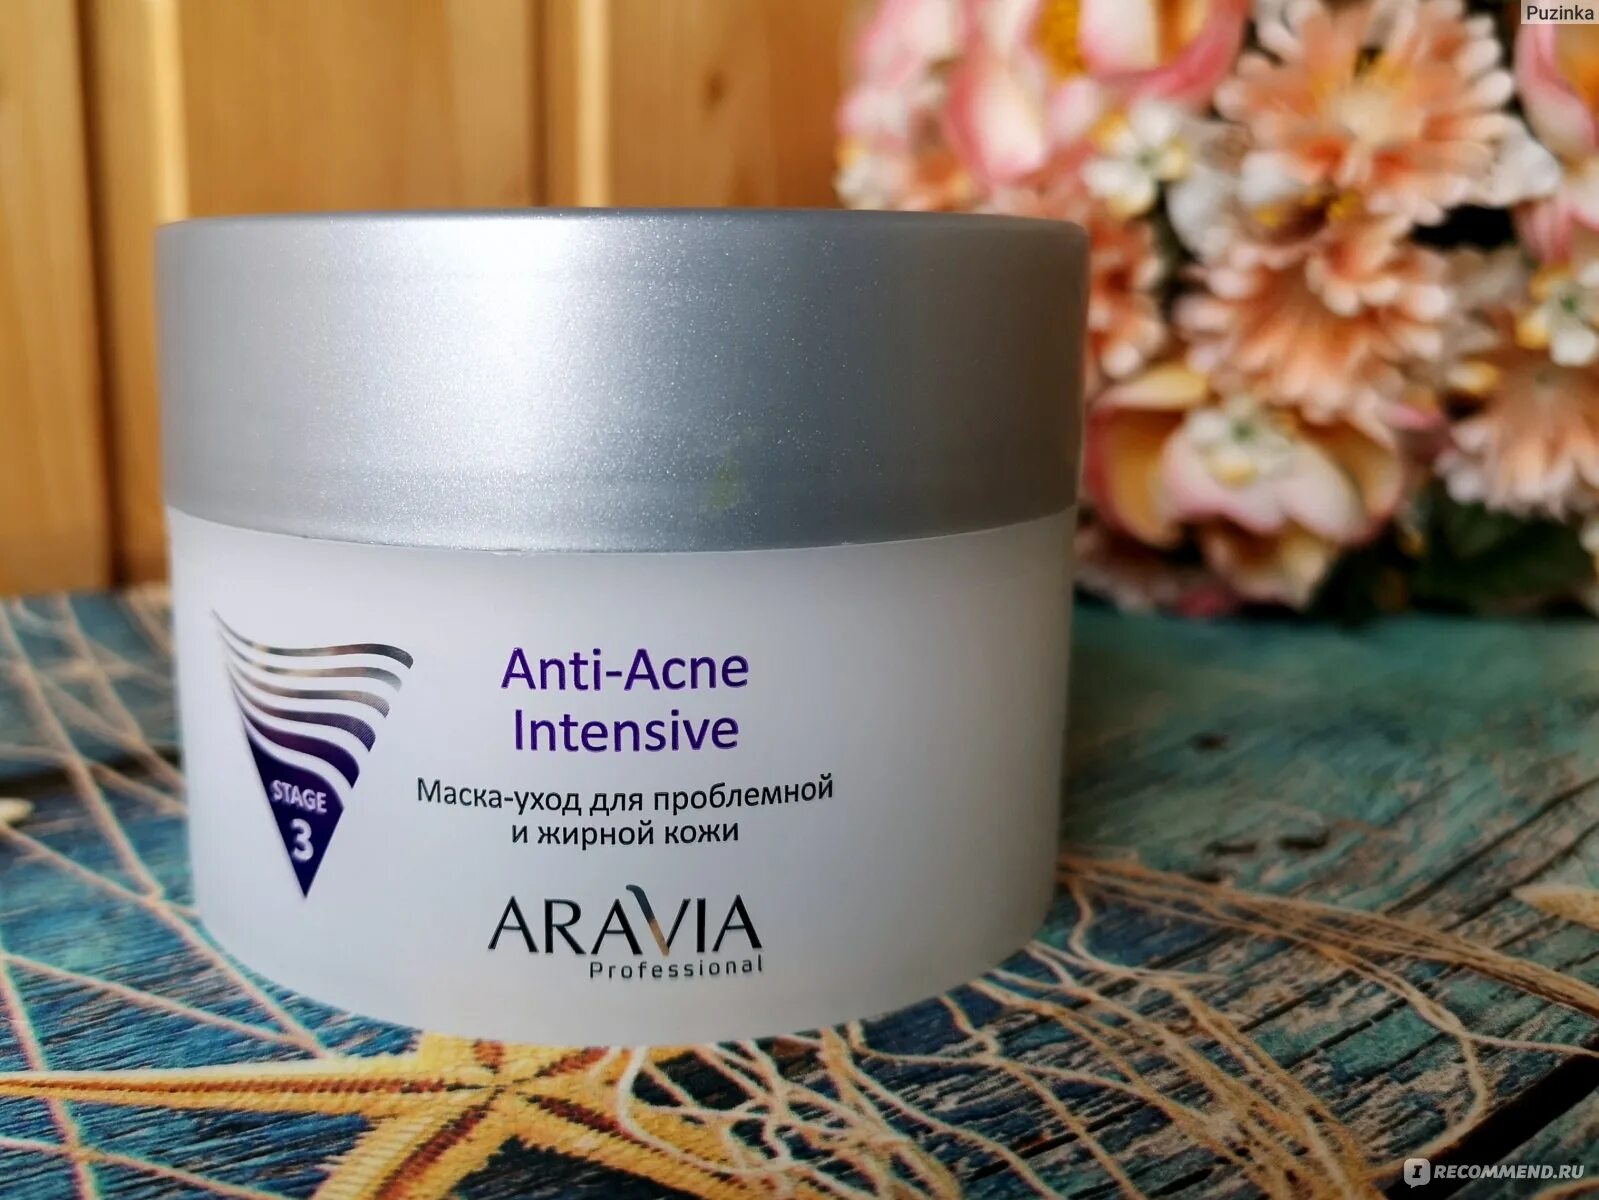 Маска Aravia Anti-acne. Anti acne Intensive Aravia. Aravia professional Anti-acne Intensive. Aravia маска для проблемной кожи.